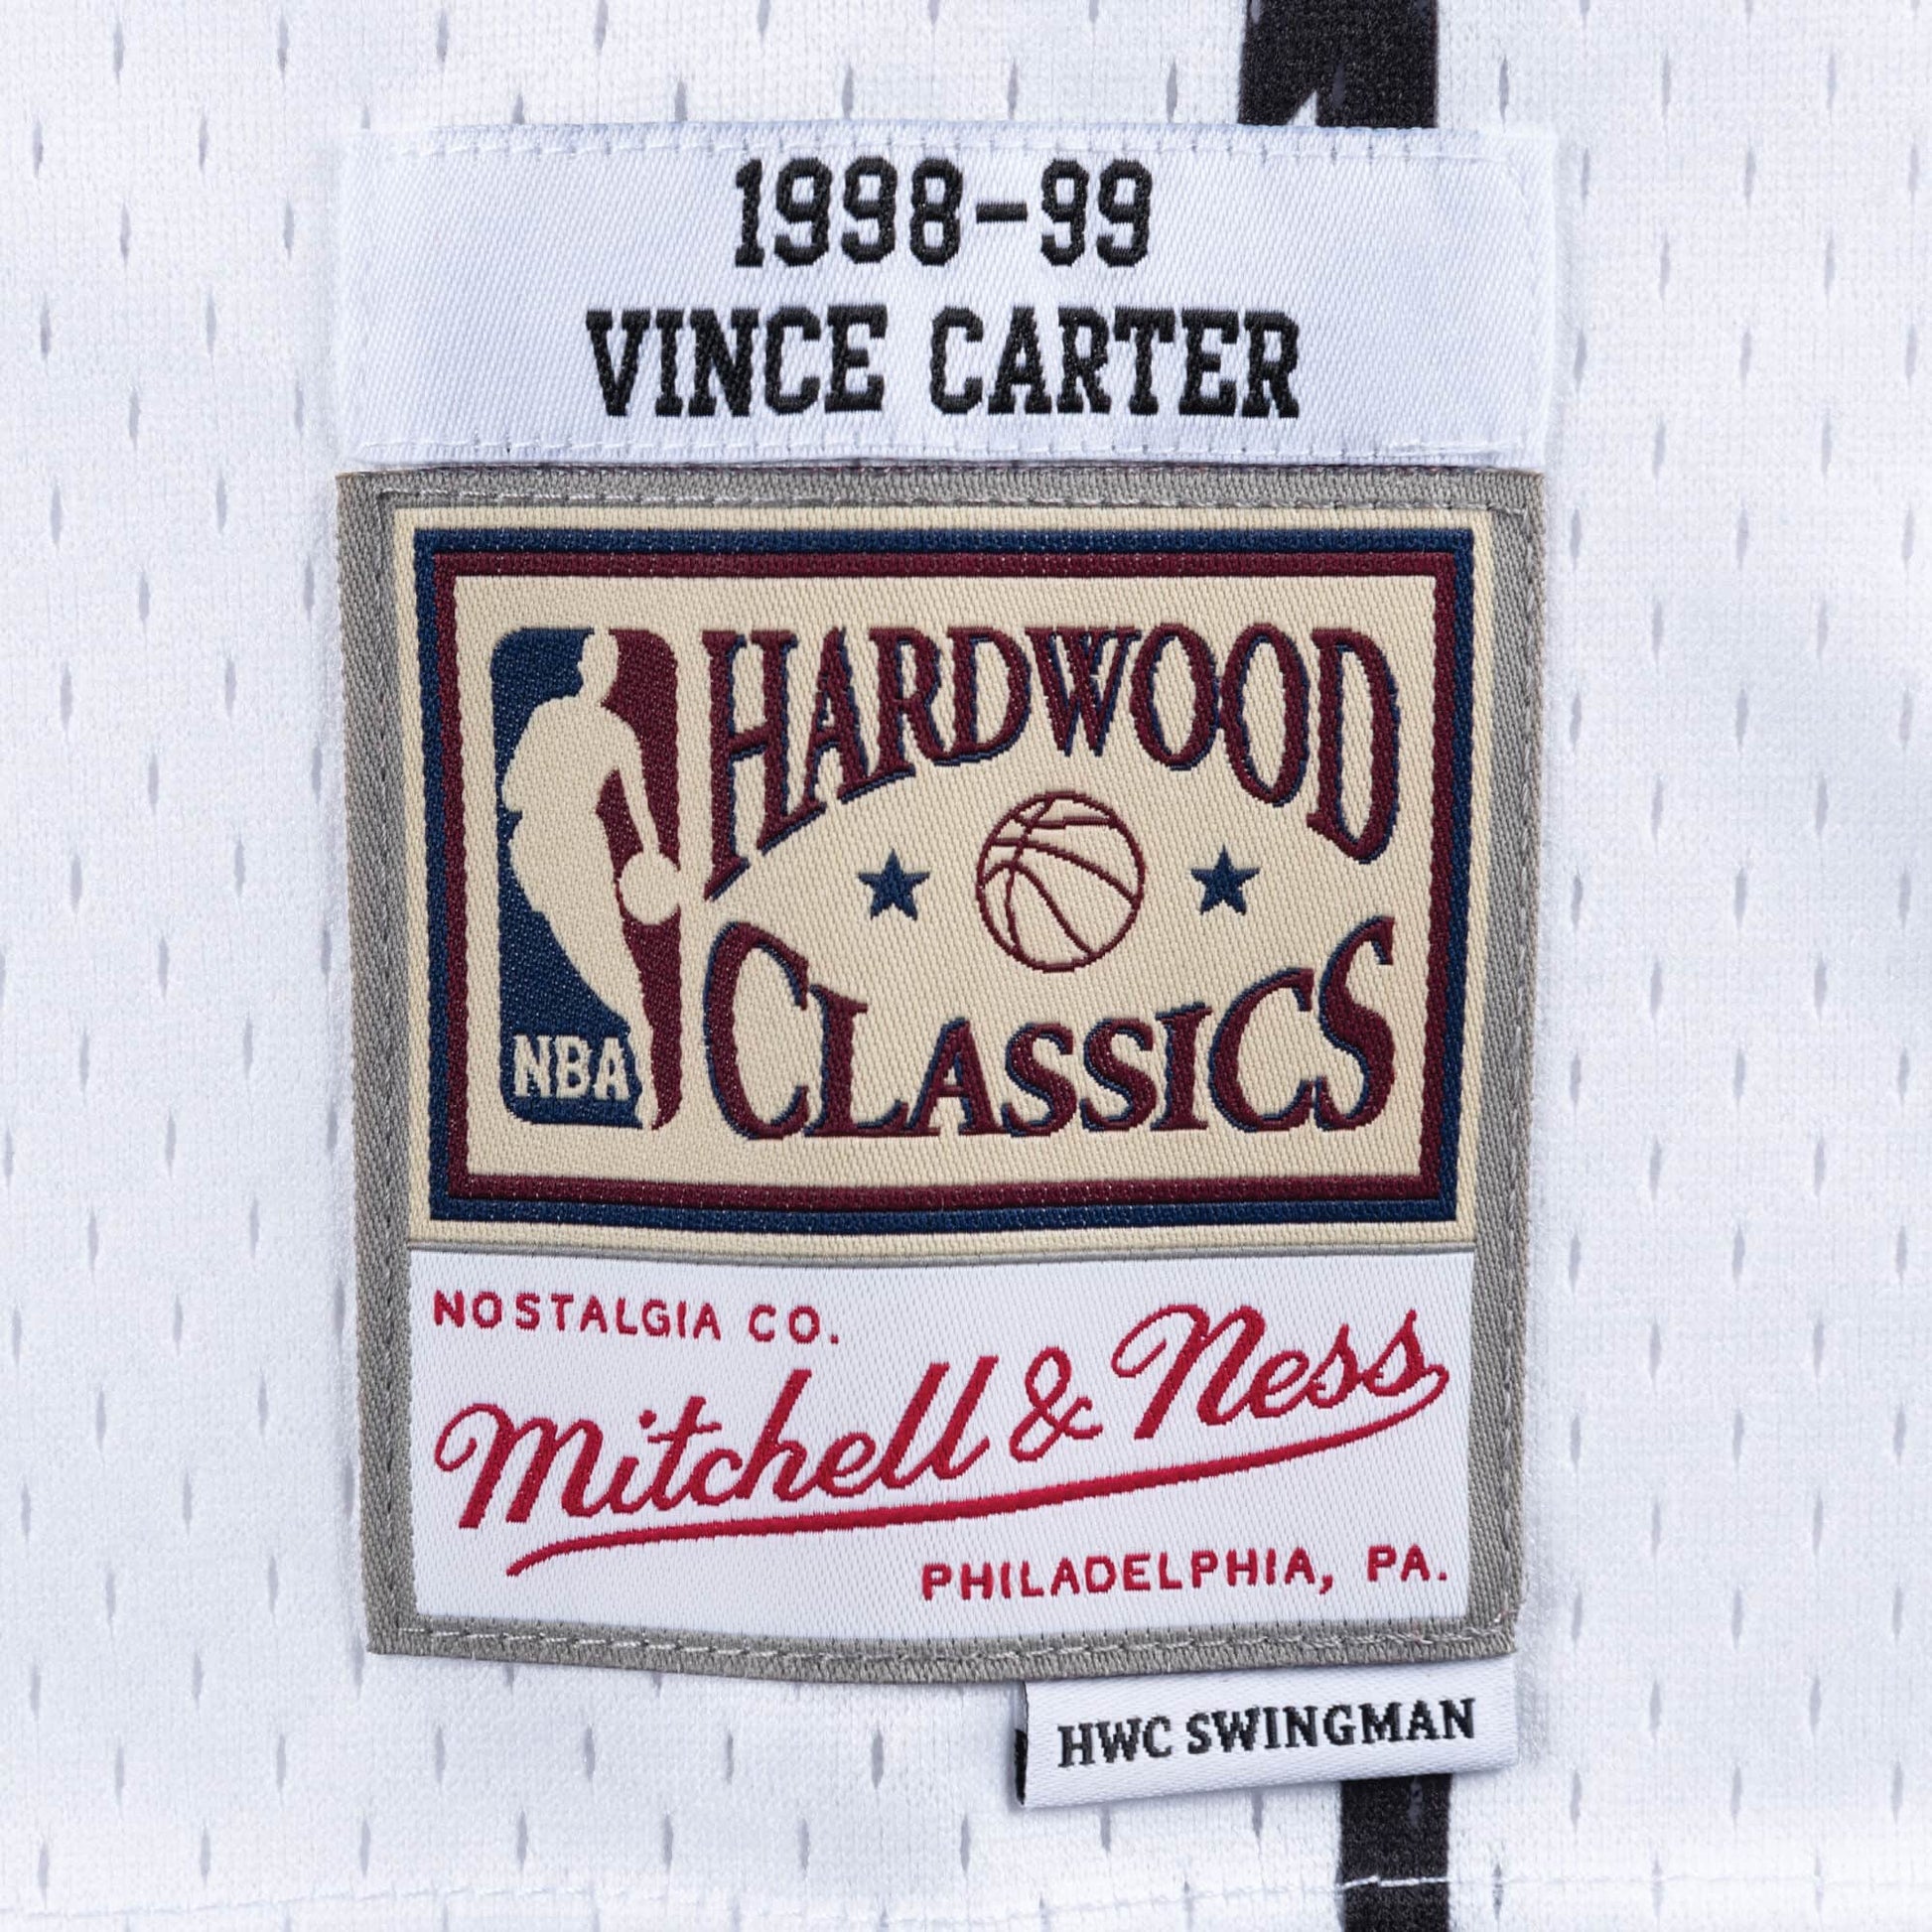 Vince Carter #15 Toronto Raptors Hardwood Classic Jersey for Sale